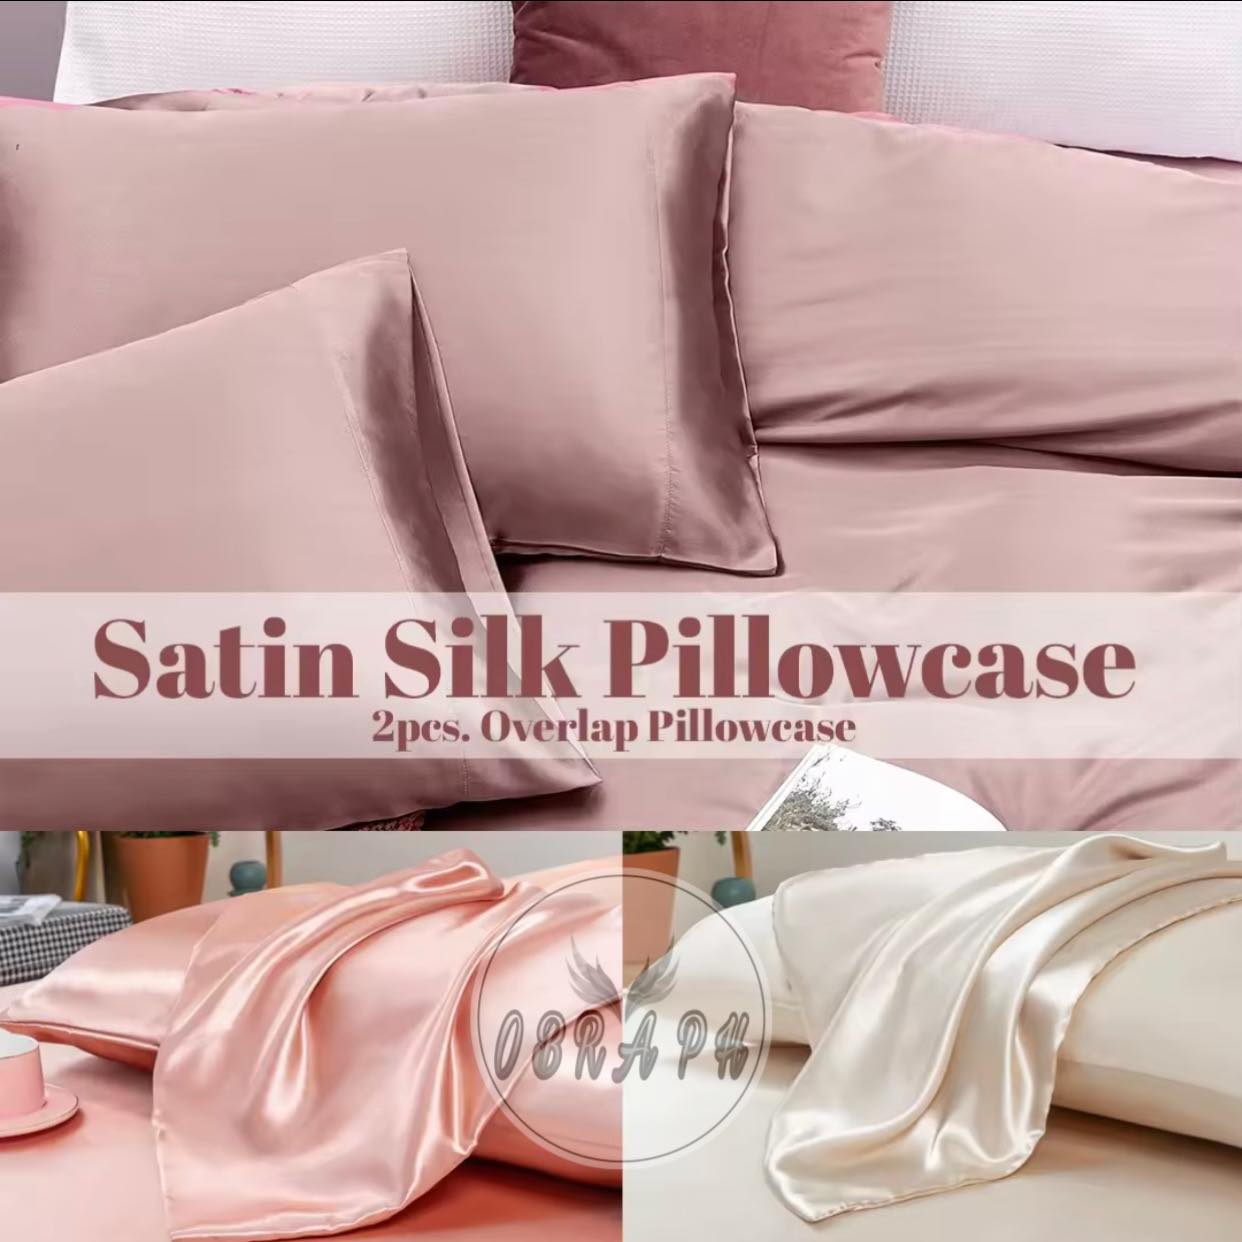 2 pcs Satin Silk Pillowcase, Hotel Quality Satin Silk Pillow case, Premium  Quality Satin Silk Pillowcase